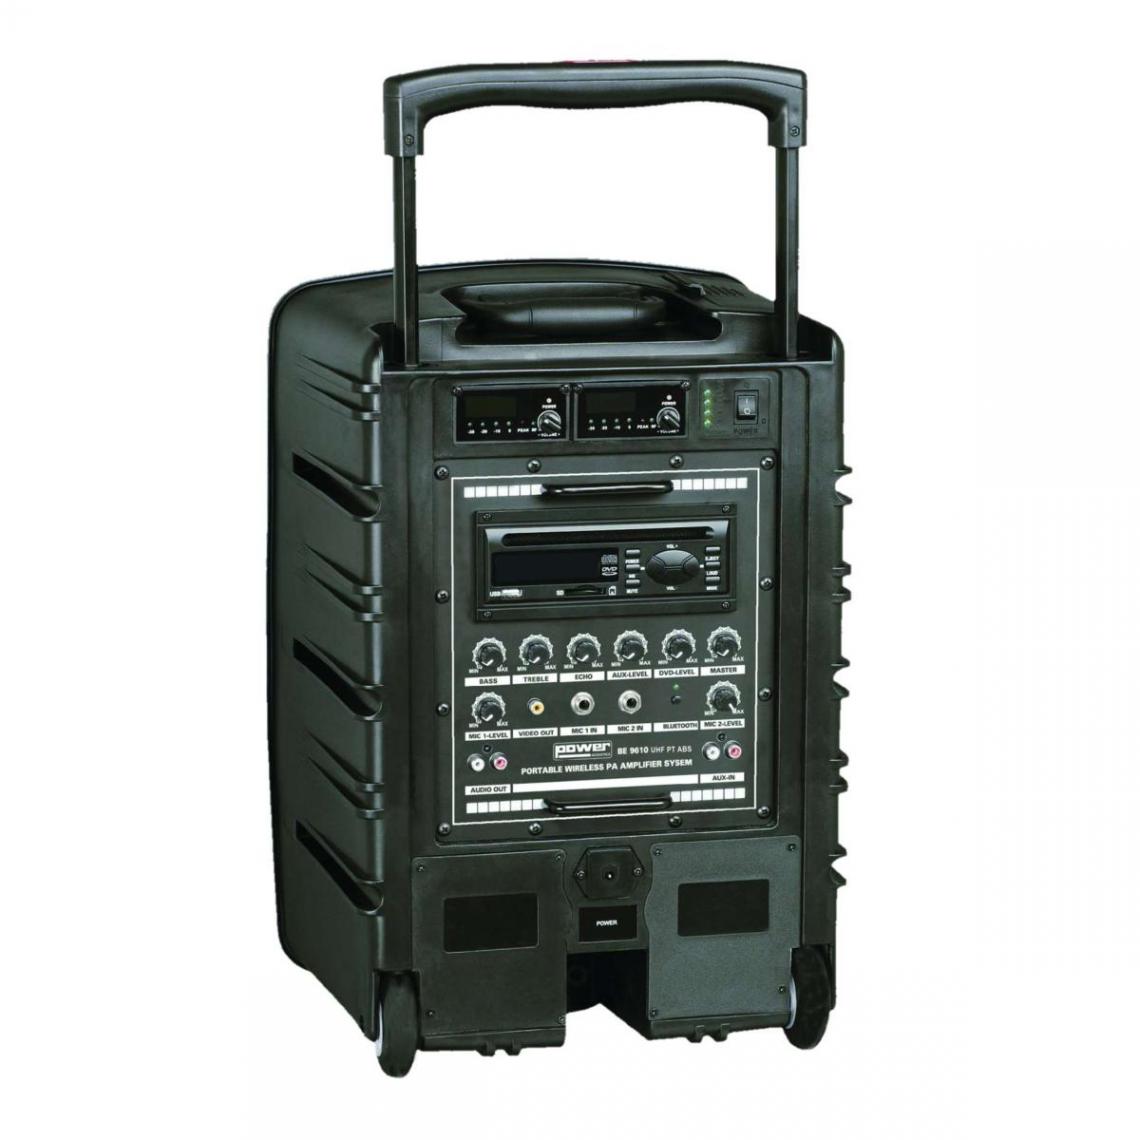 Power Acoustics - BE 9610 UHF PT ABS - Sono portable CD MP3+USB+DIVX+2 micros main UHF+BODY PACK - Sonorisation portable